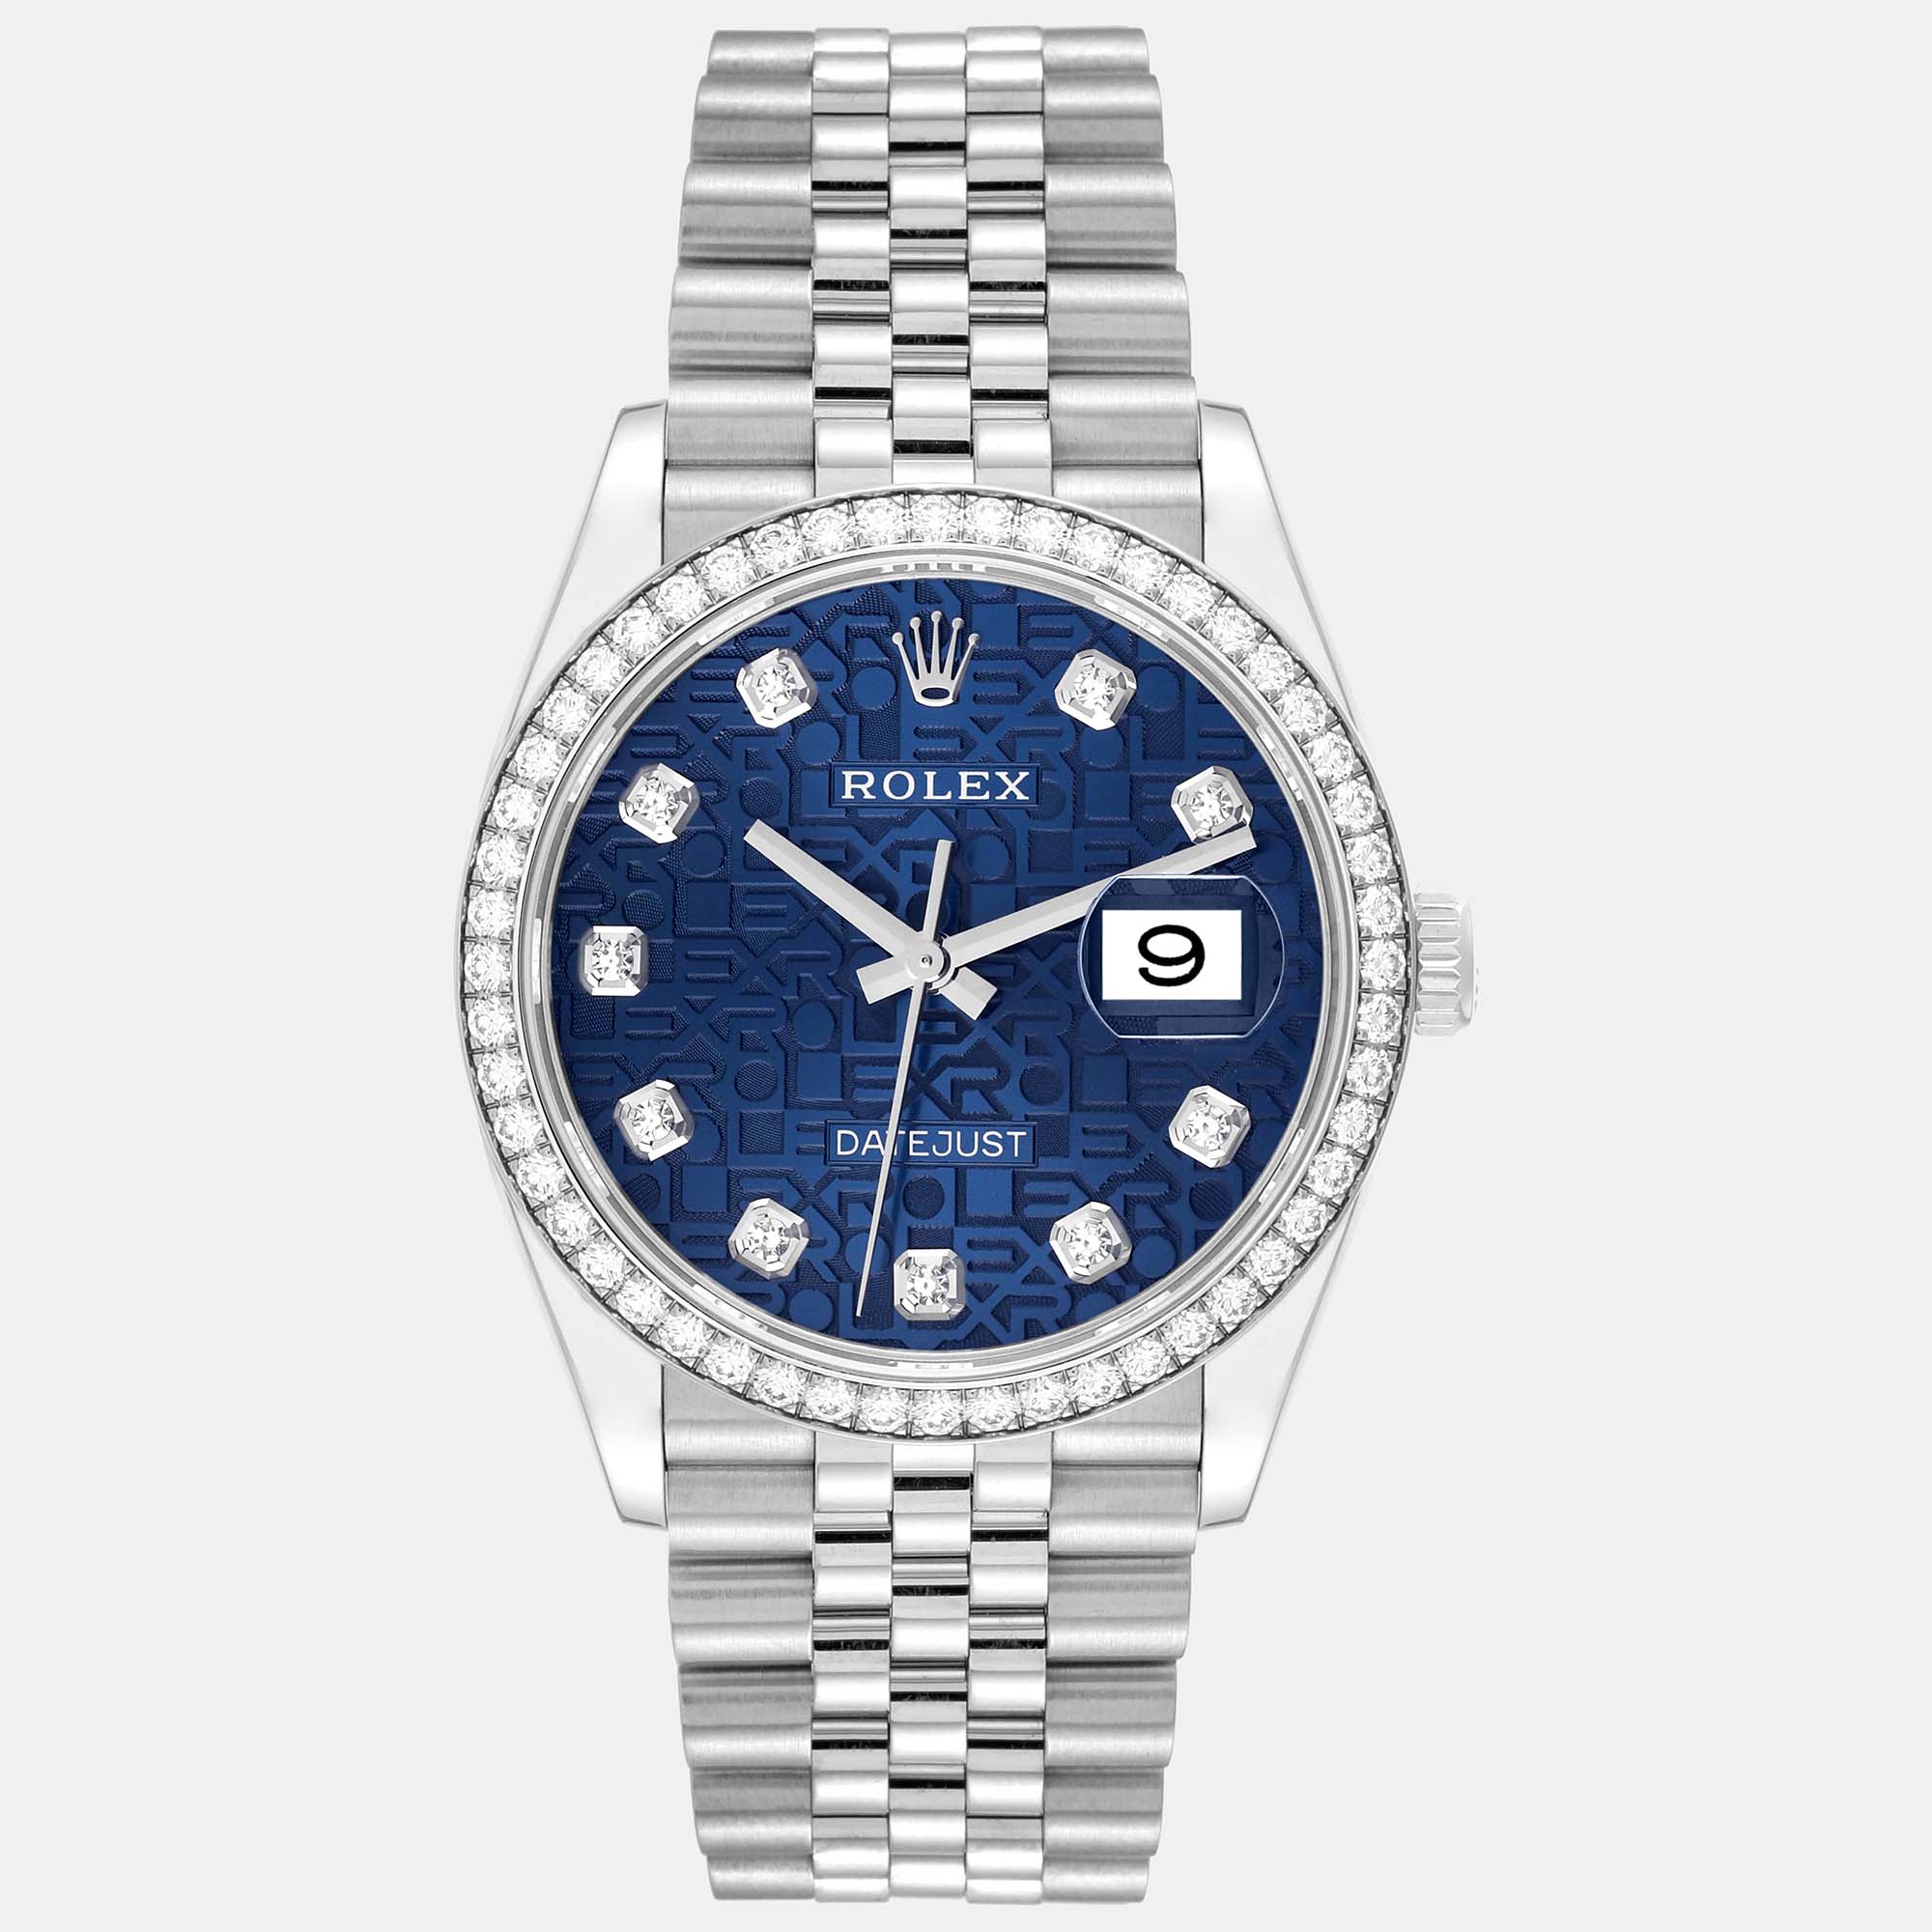 Rolex datejust steel blue diamond dial bezel men's watch 36.0 mm